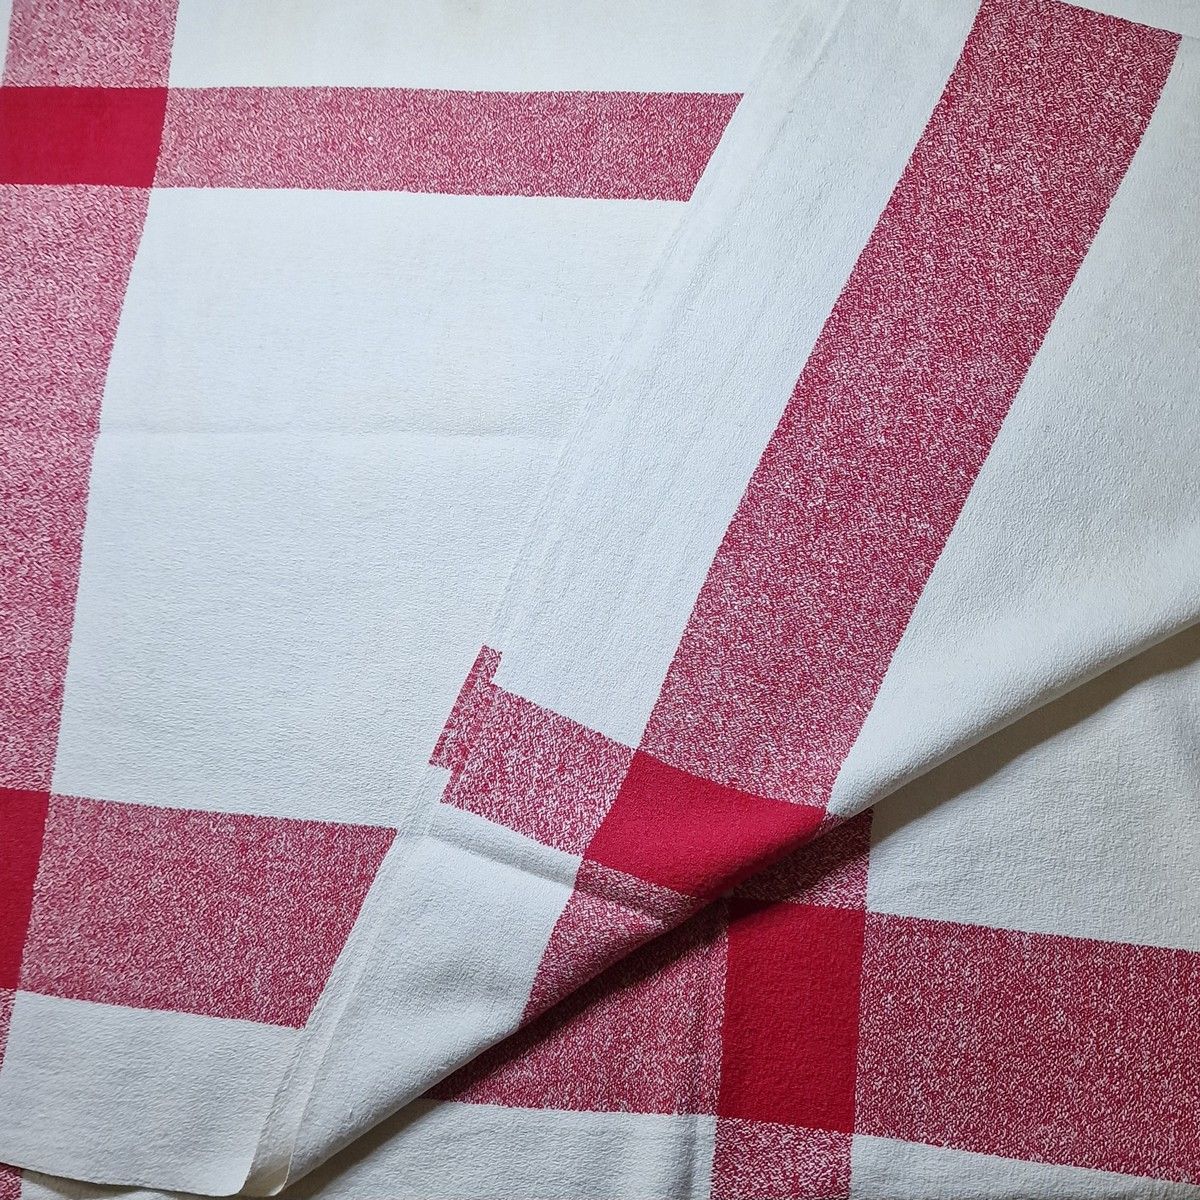 Null 白色棉锦缎矩形床垫 约 1930 年，红色条纹编织装饰
182 x 144 厘米
BE（泛黄）
(按原样出售）